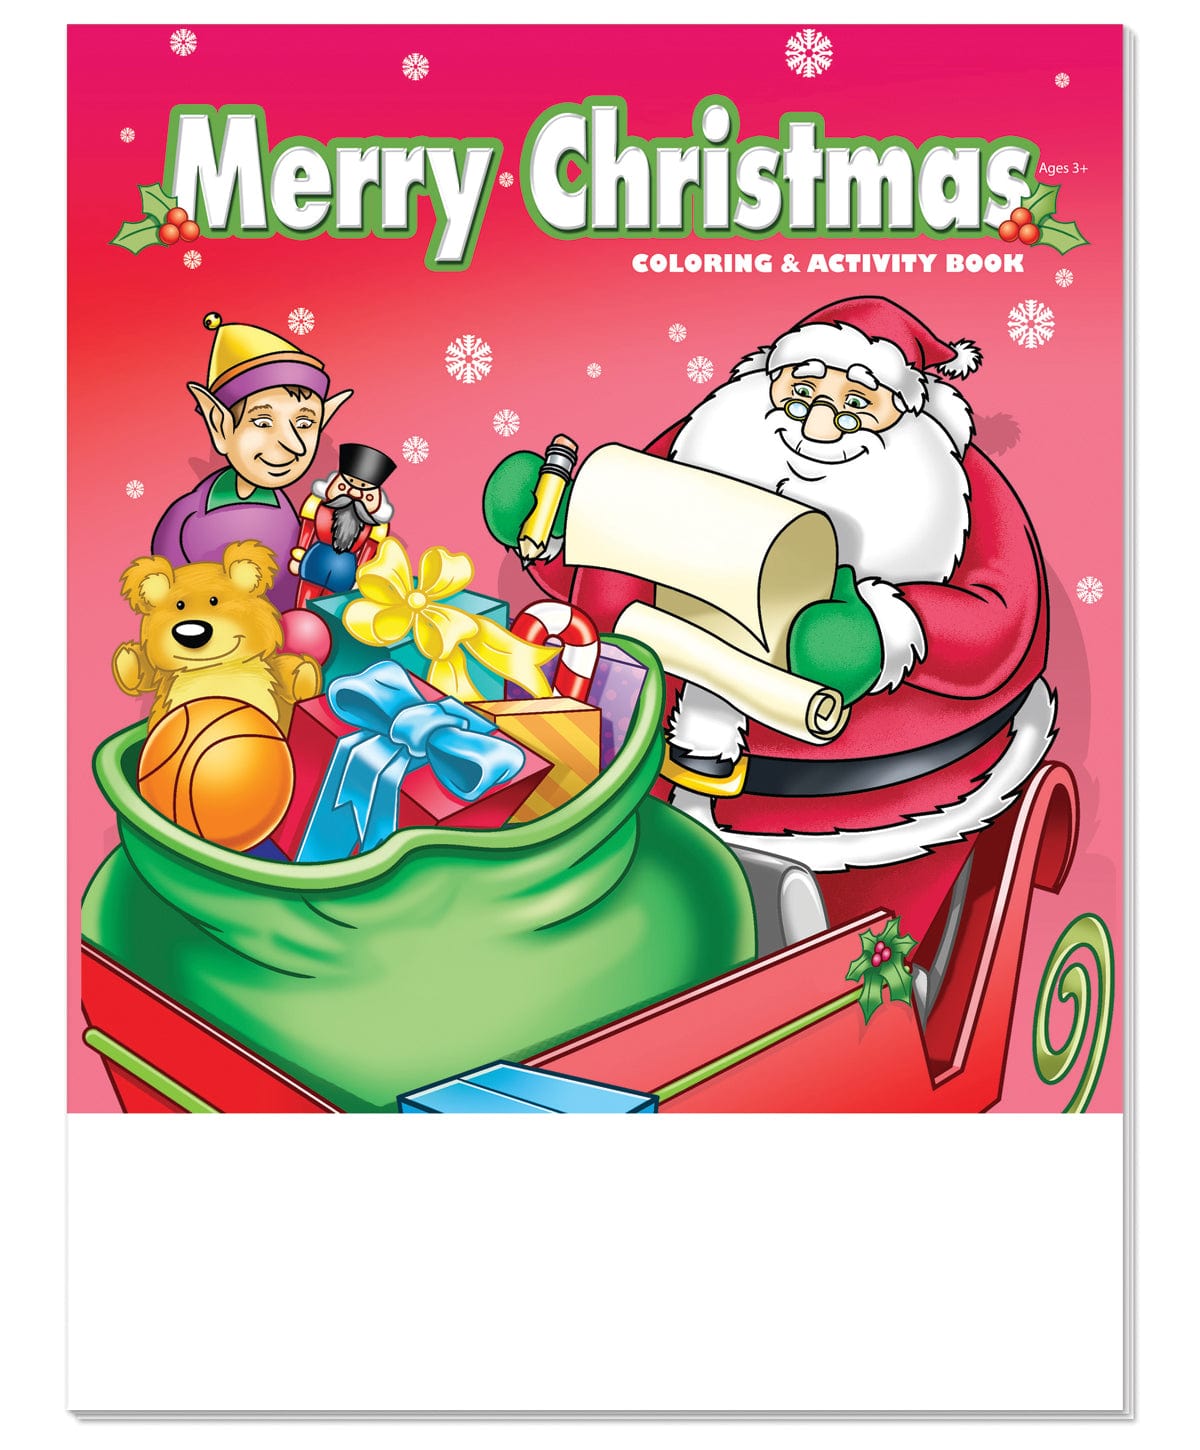 Christmas Coloring Books For Kids Bulk: Christmas Book, Easy and